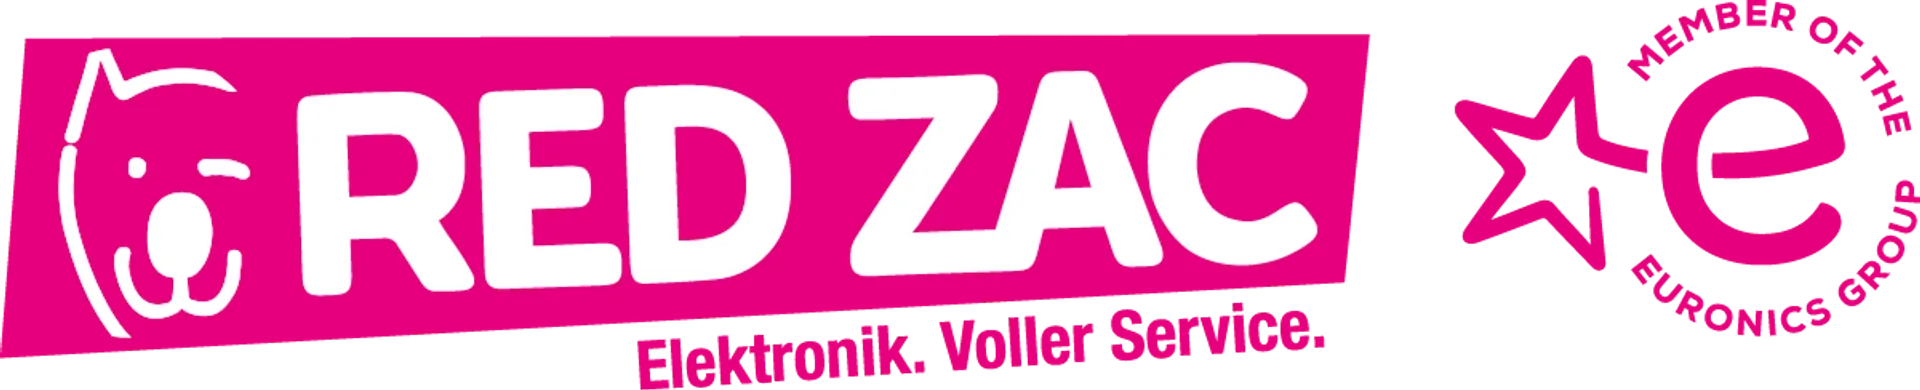 RED ZAC logo die aktuell Flugblatt